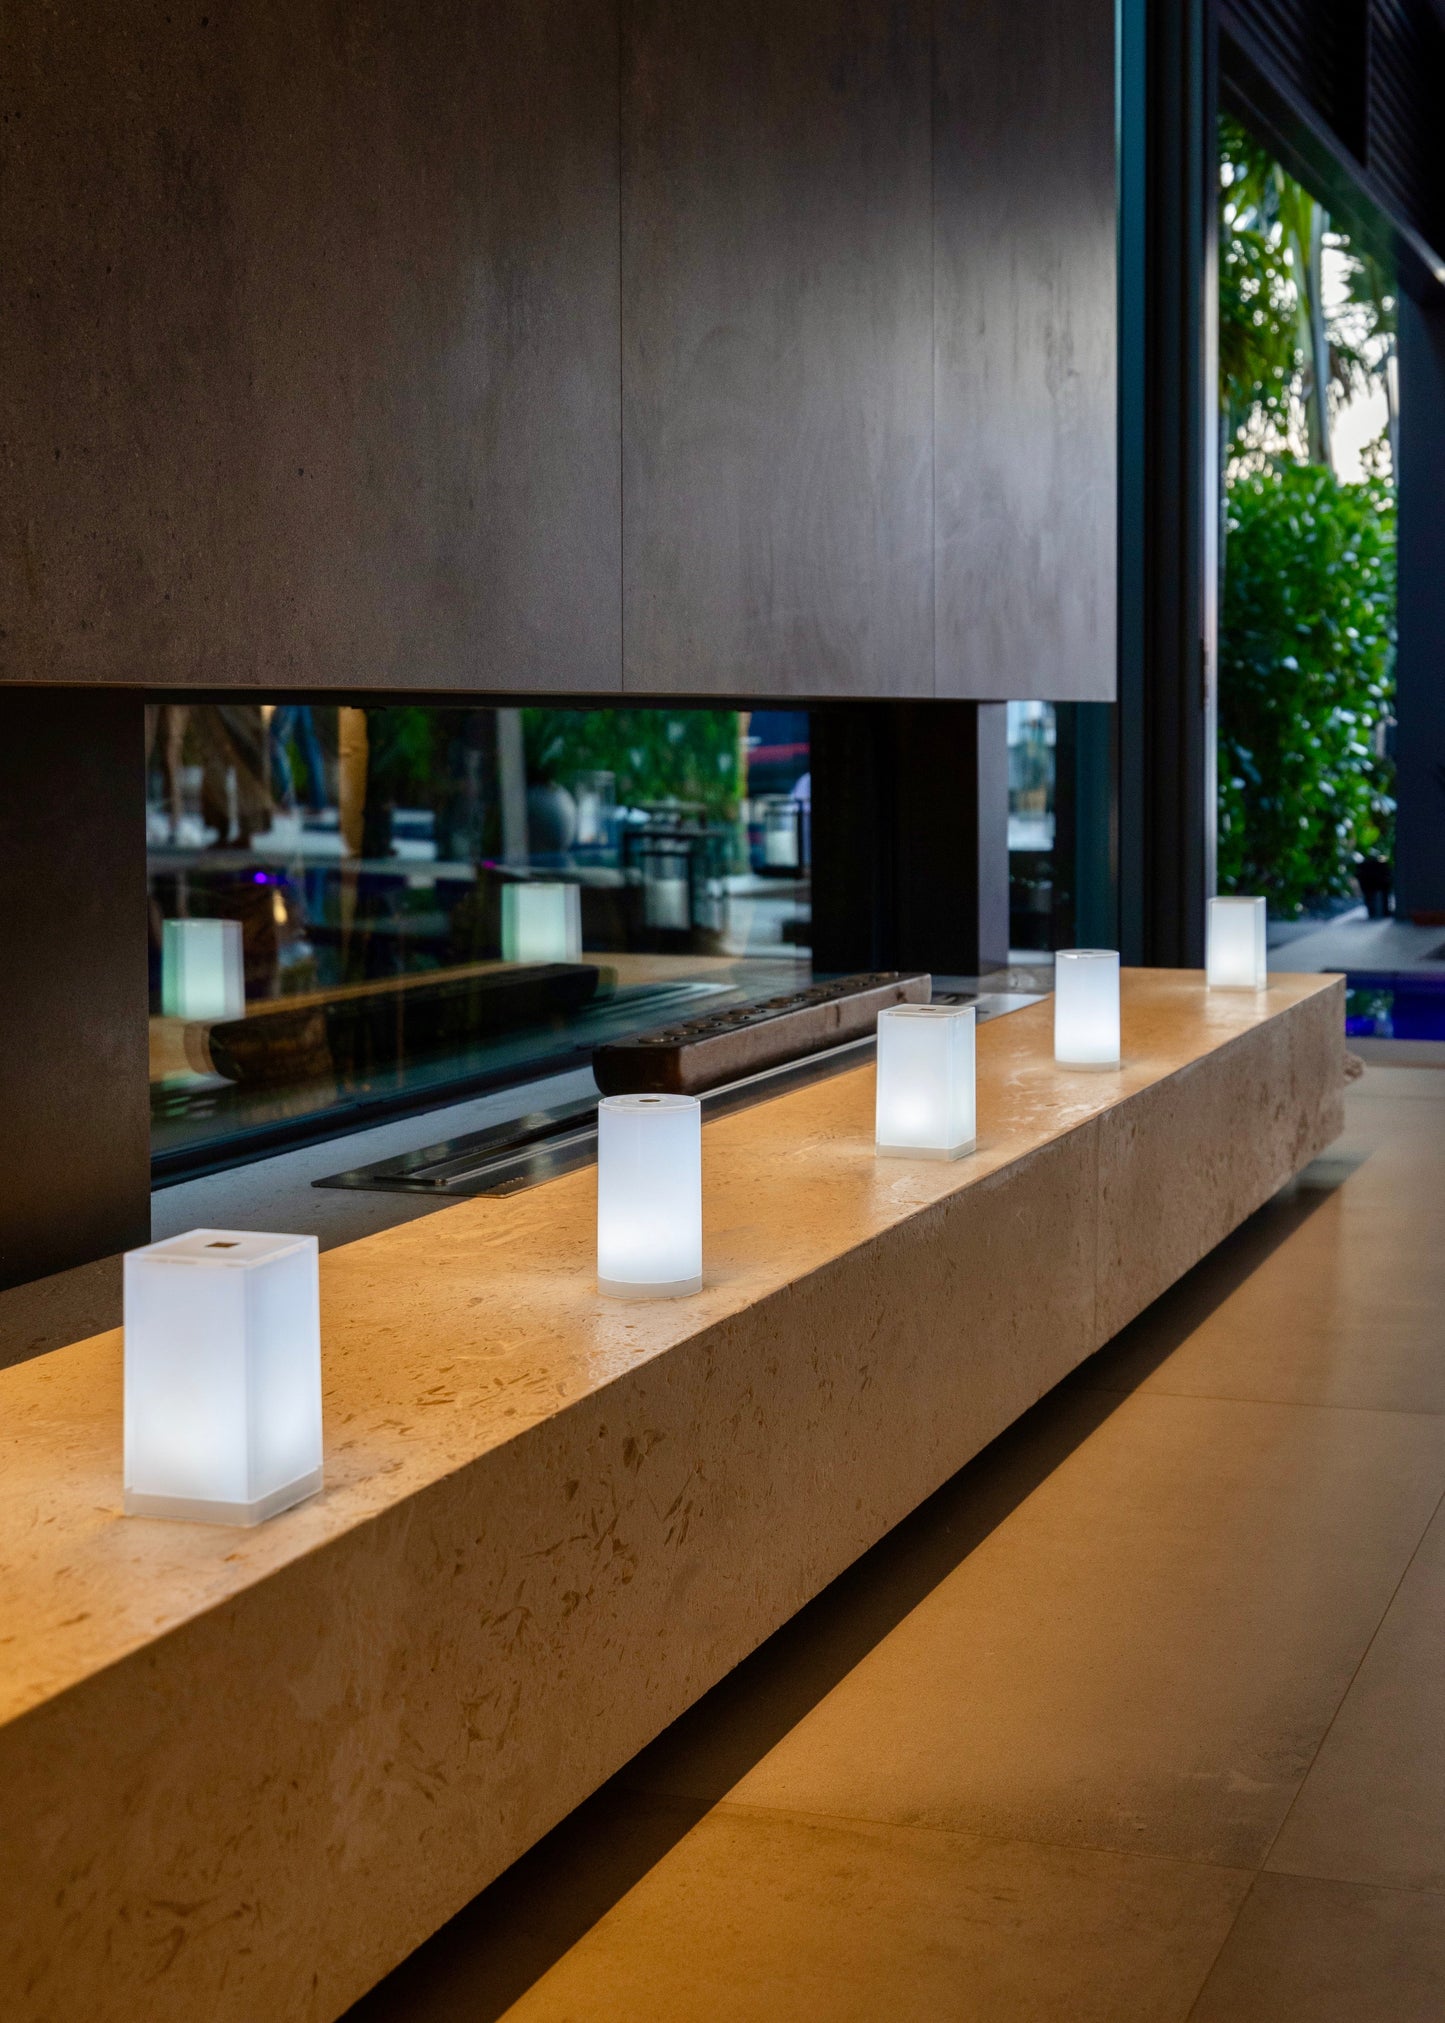 Hokare Cub Bluetooth LED Table Lamp by Smart & Green